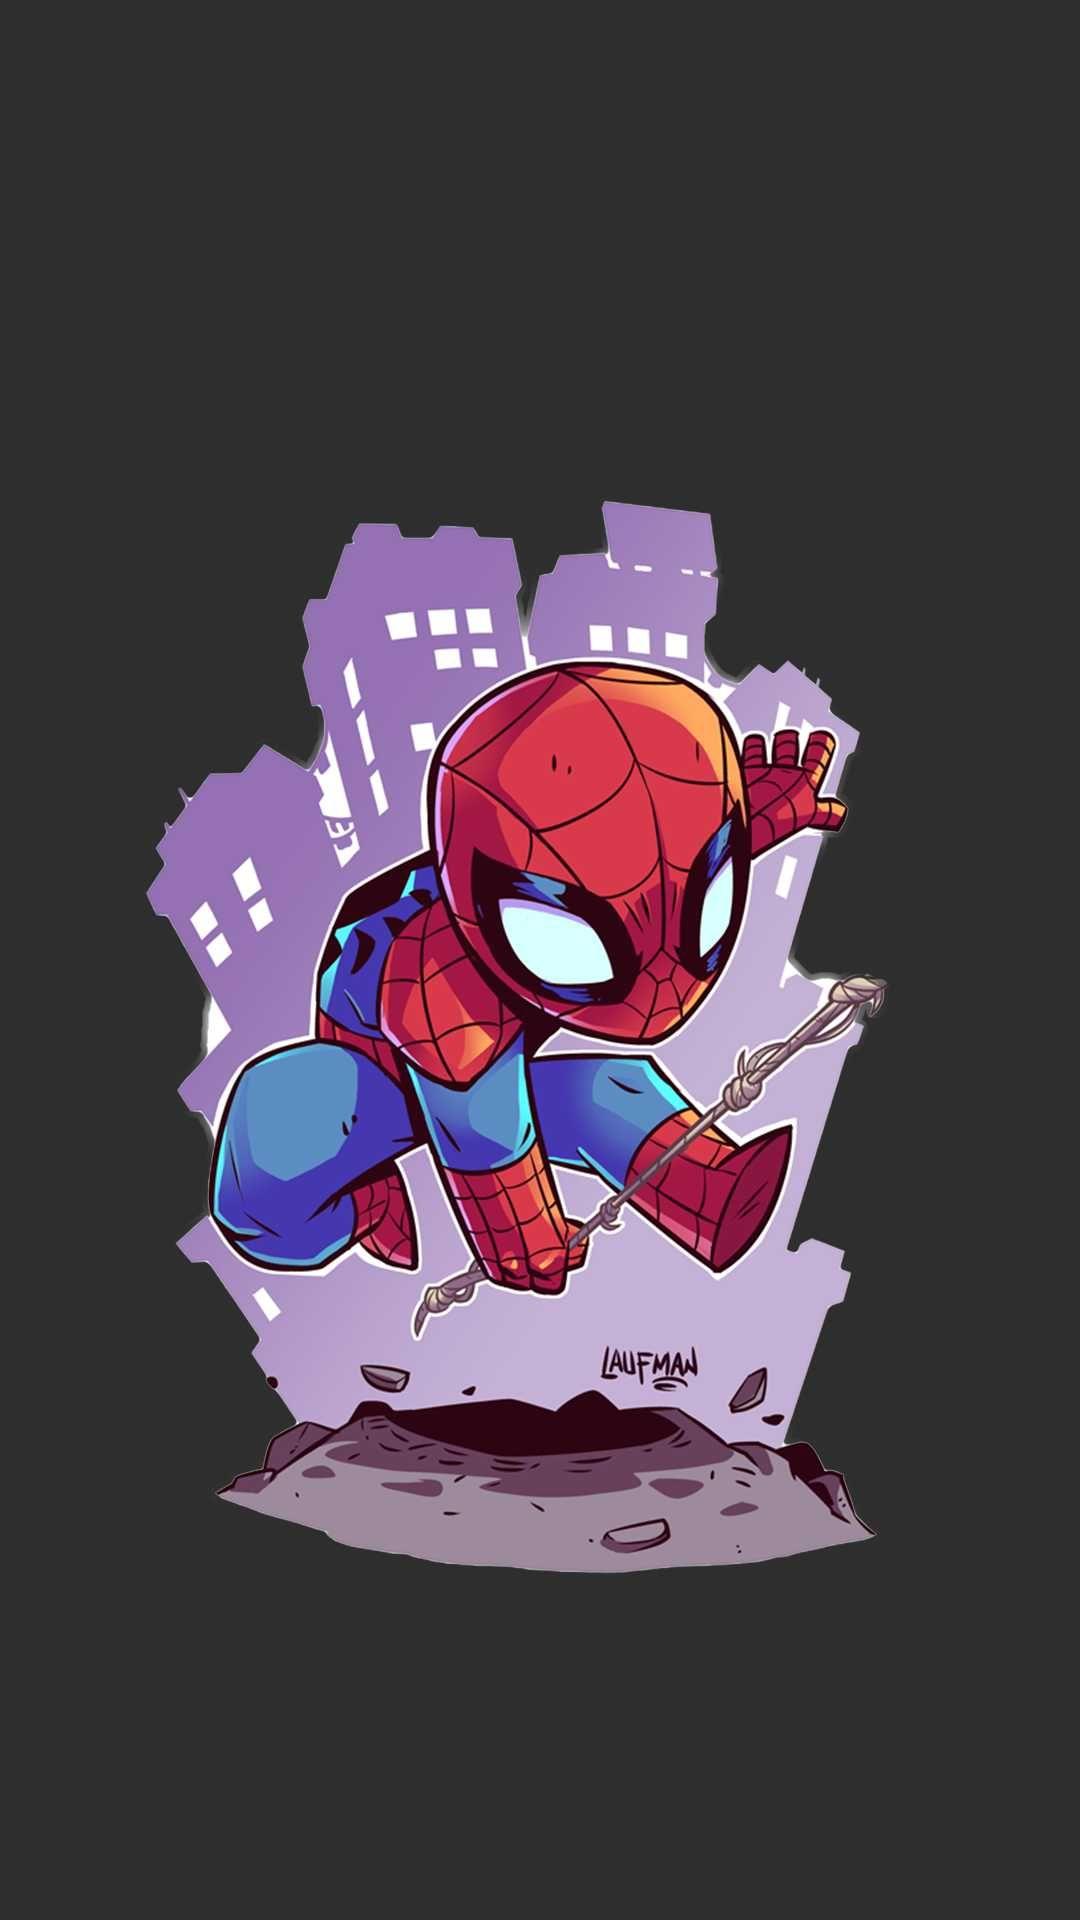 Spiderman Animated Art Wallpaper. Superhero wallpaper, Deadpool